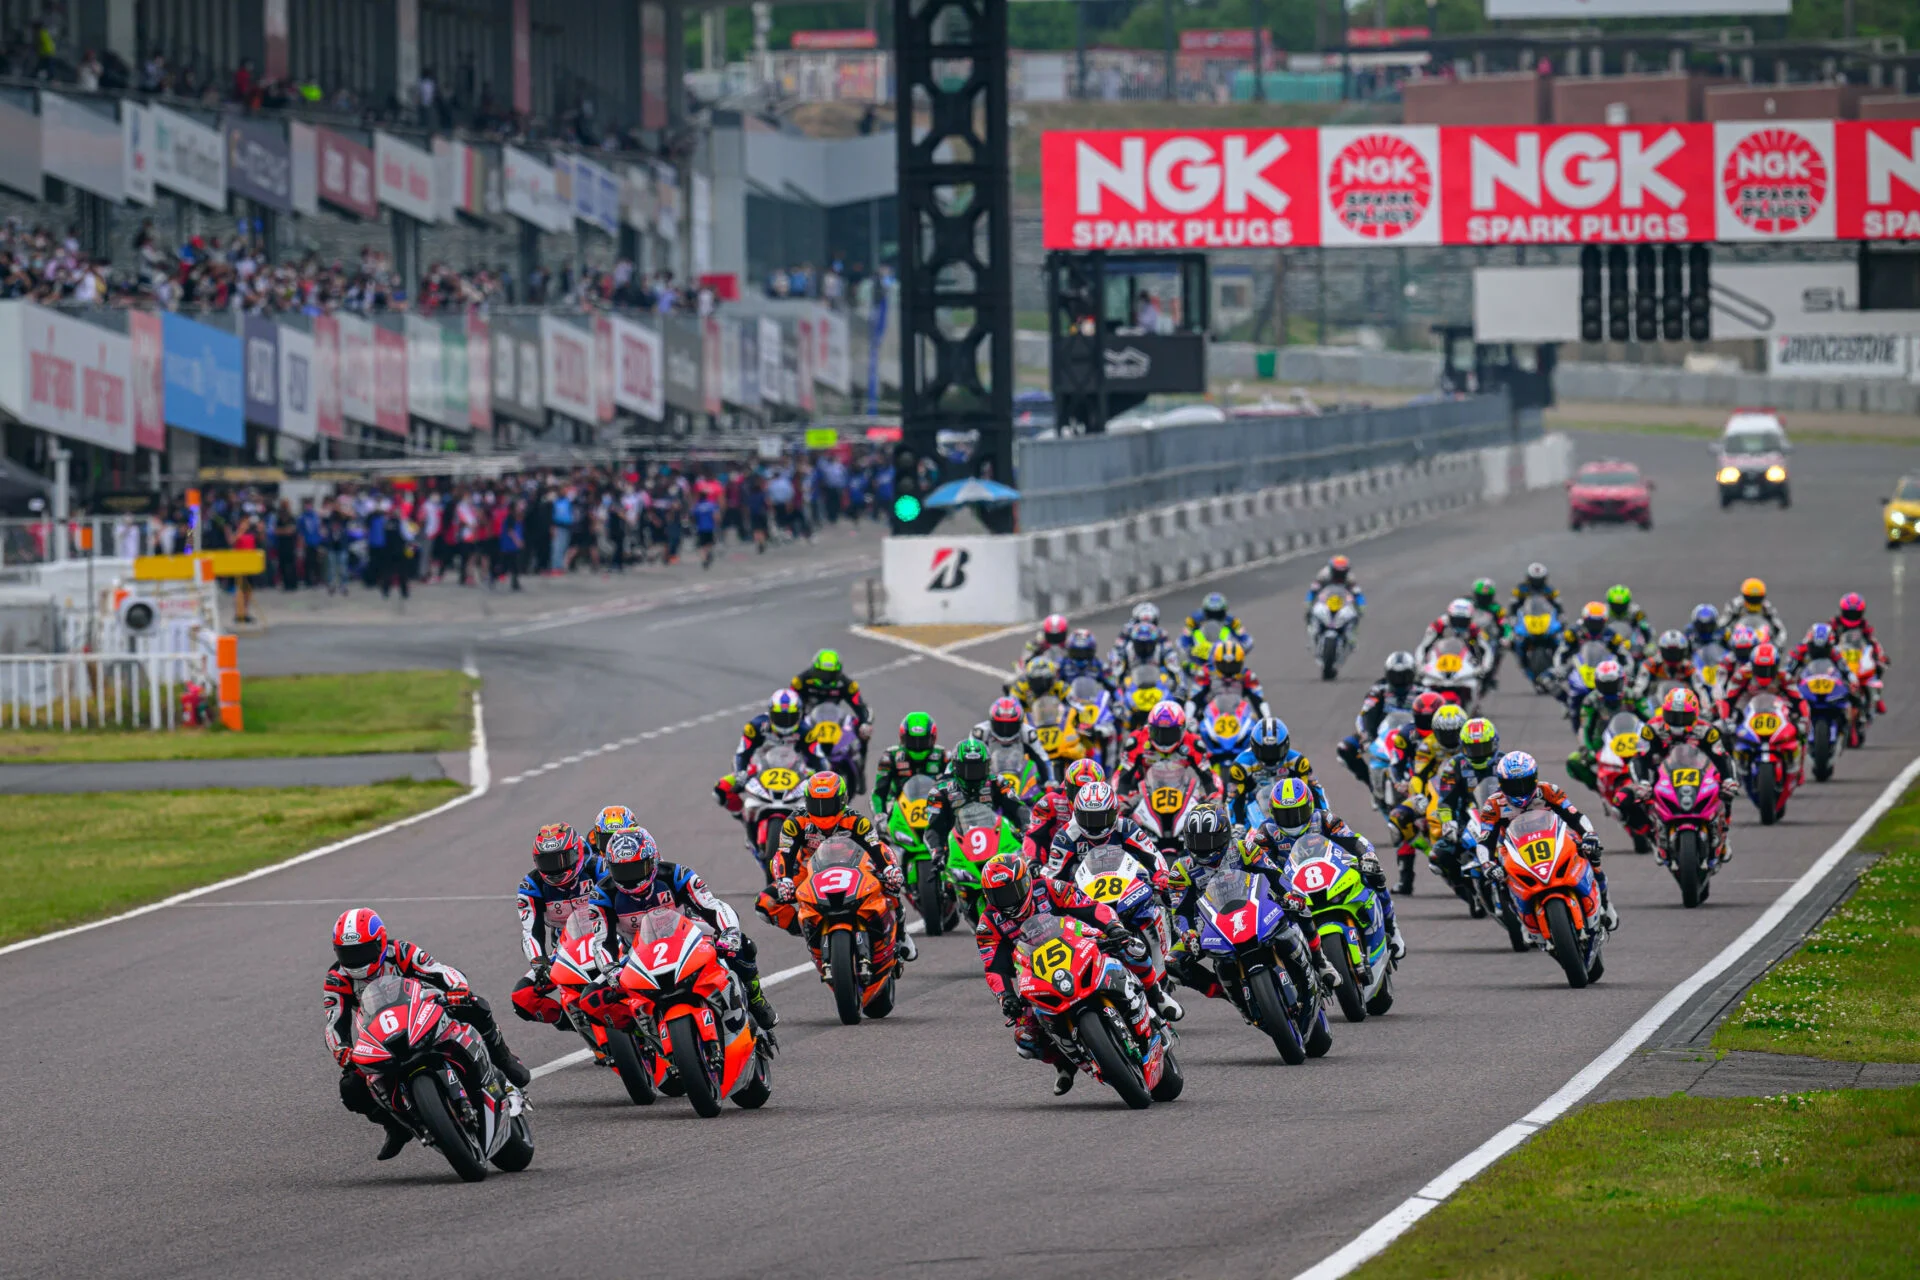 motorcycles racing at the suzuka circuit